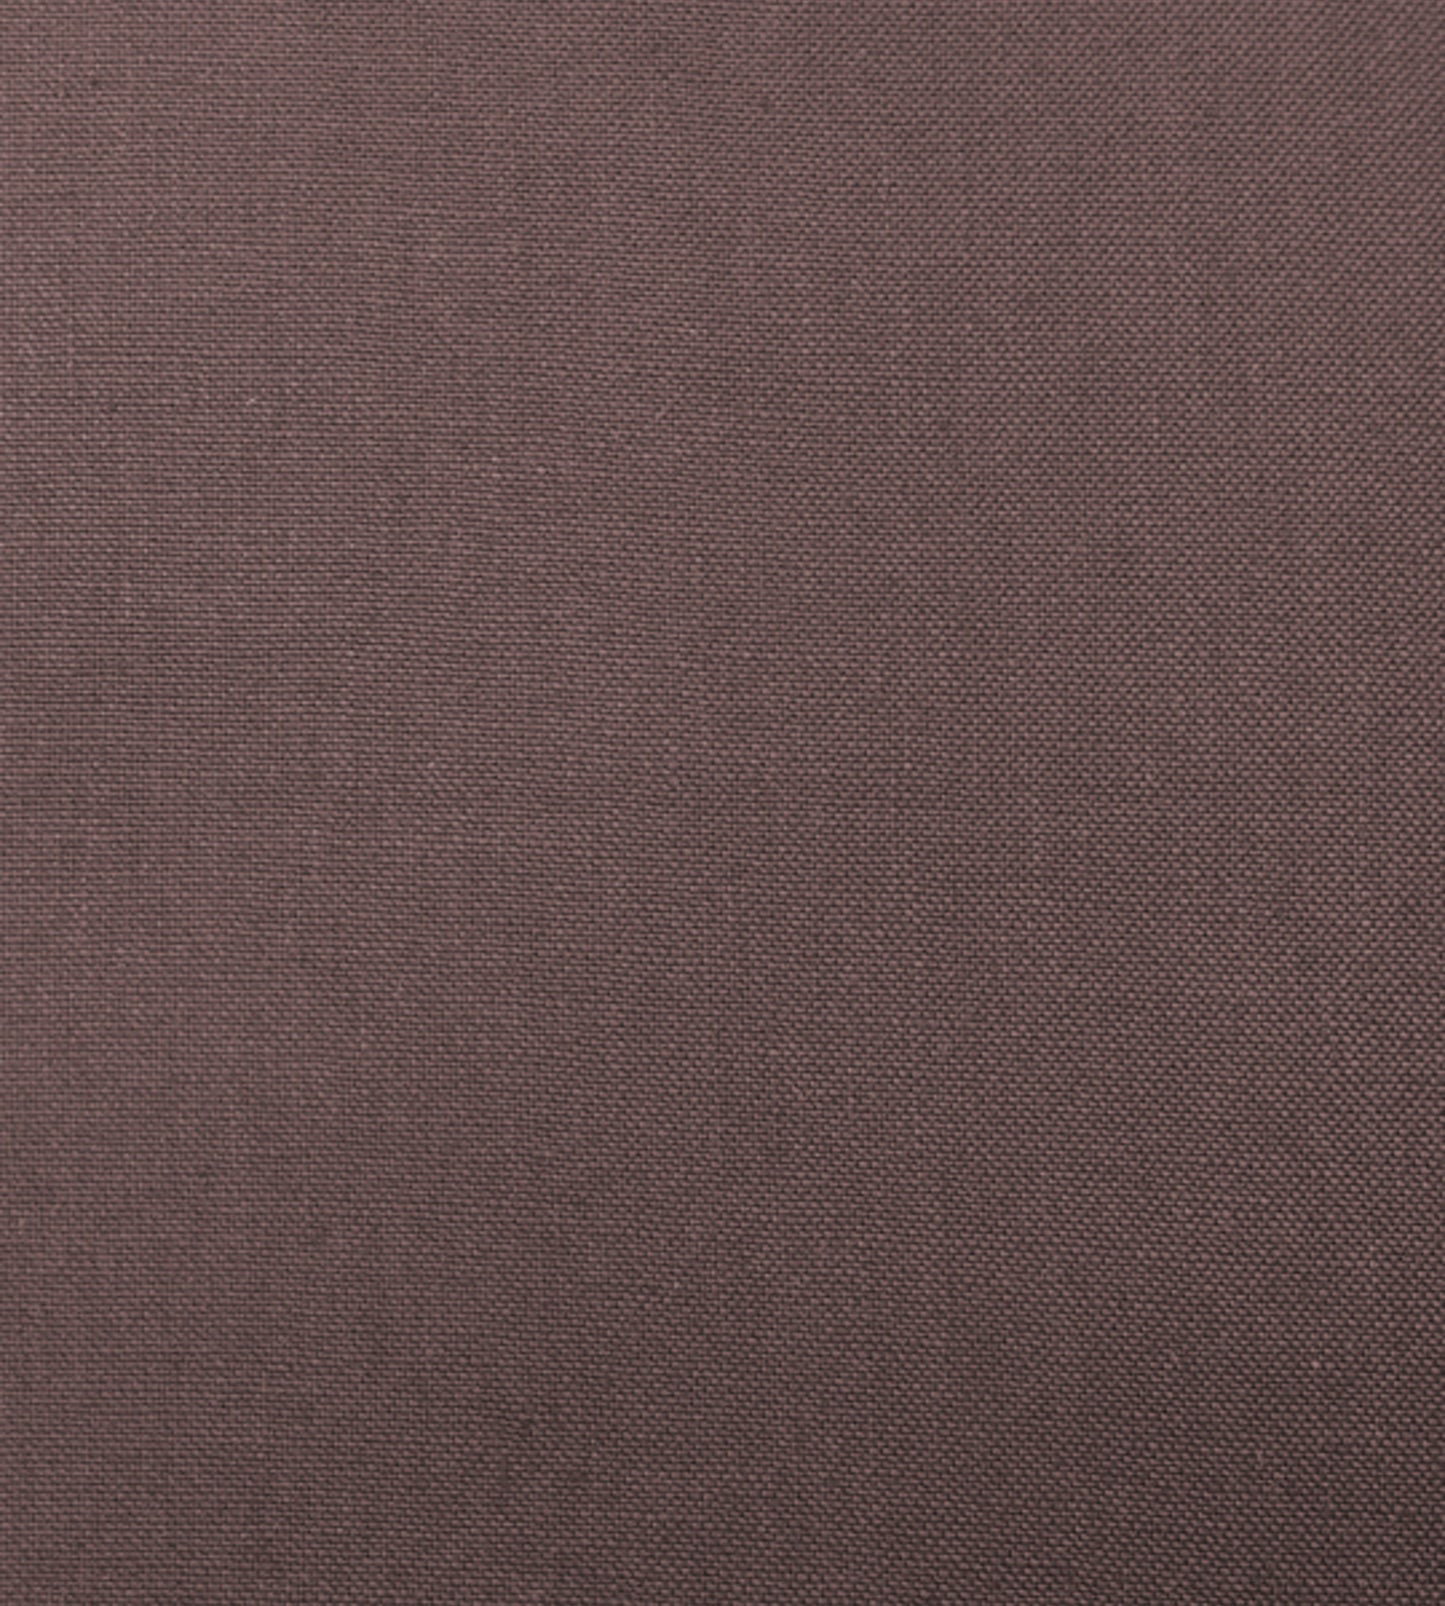 Purchase Scalamandre Fabric SKU# SC 001627108, Toscana Linen Puce 1